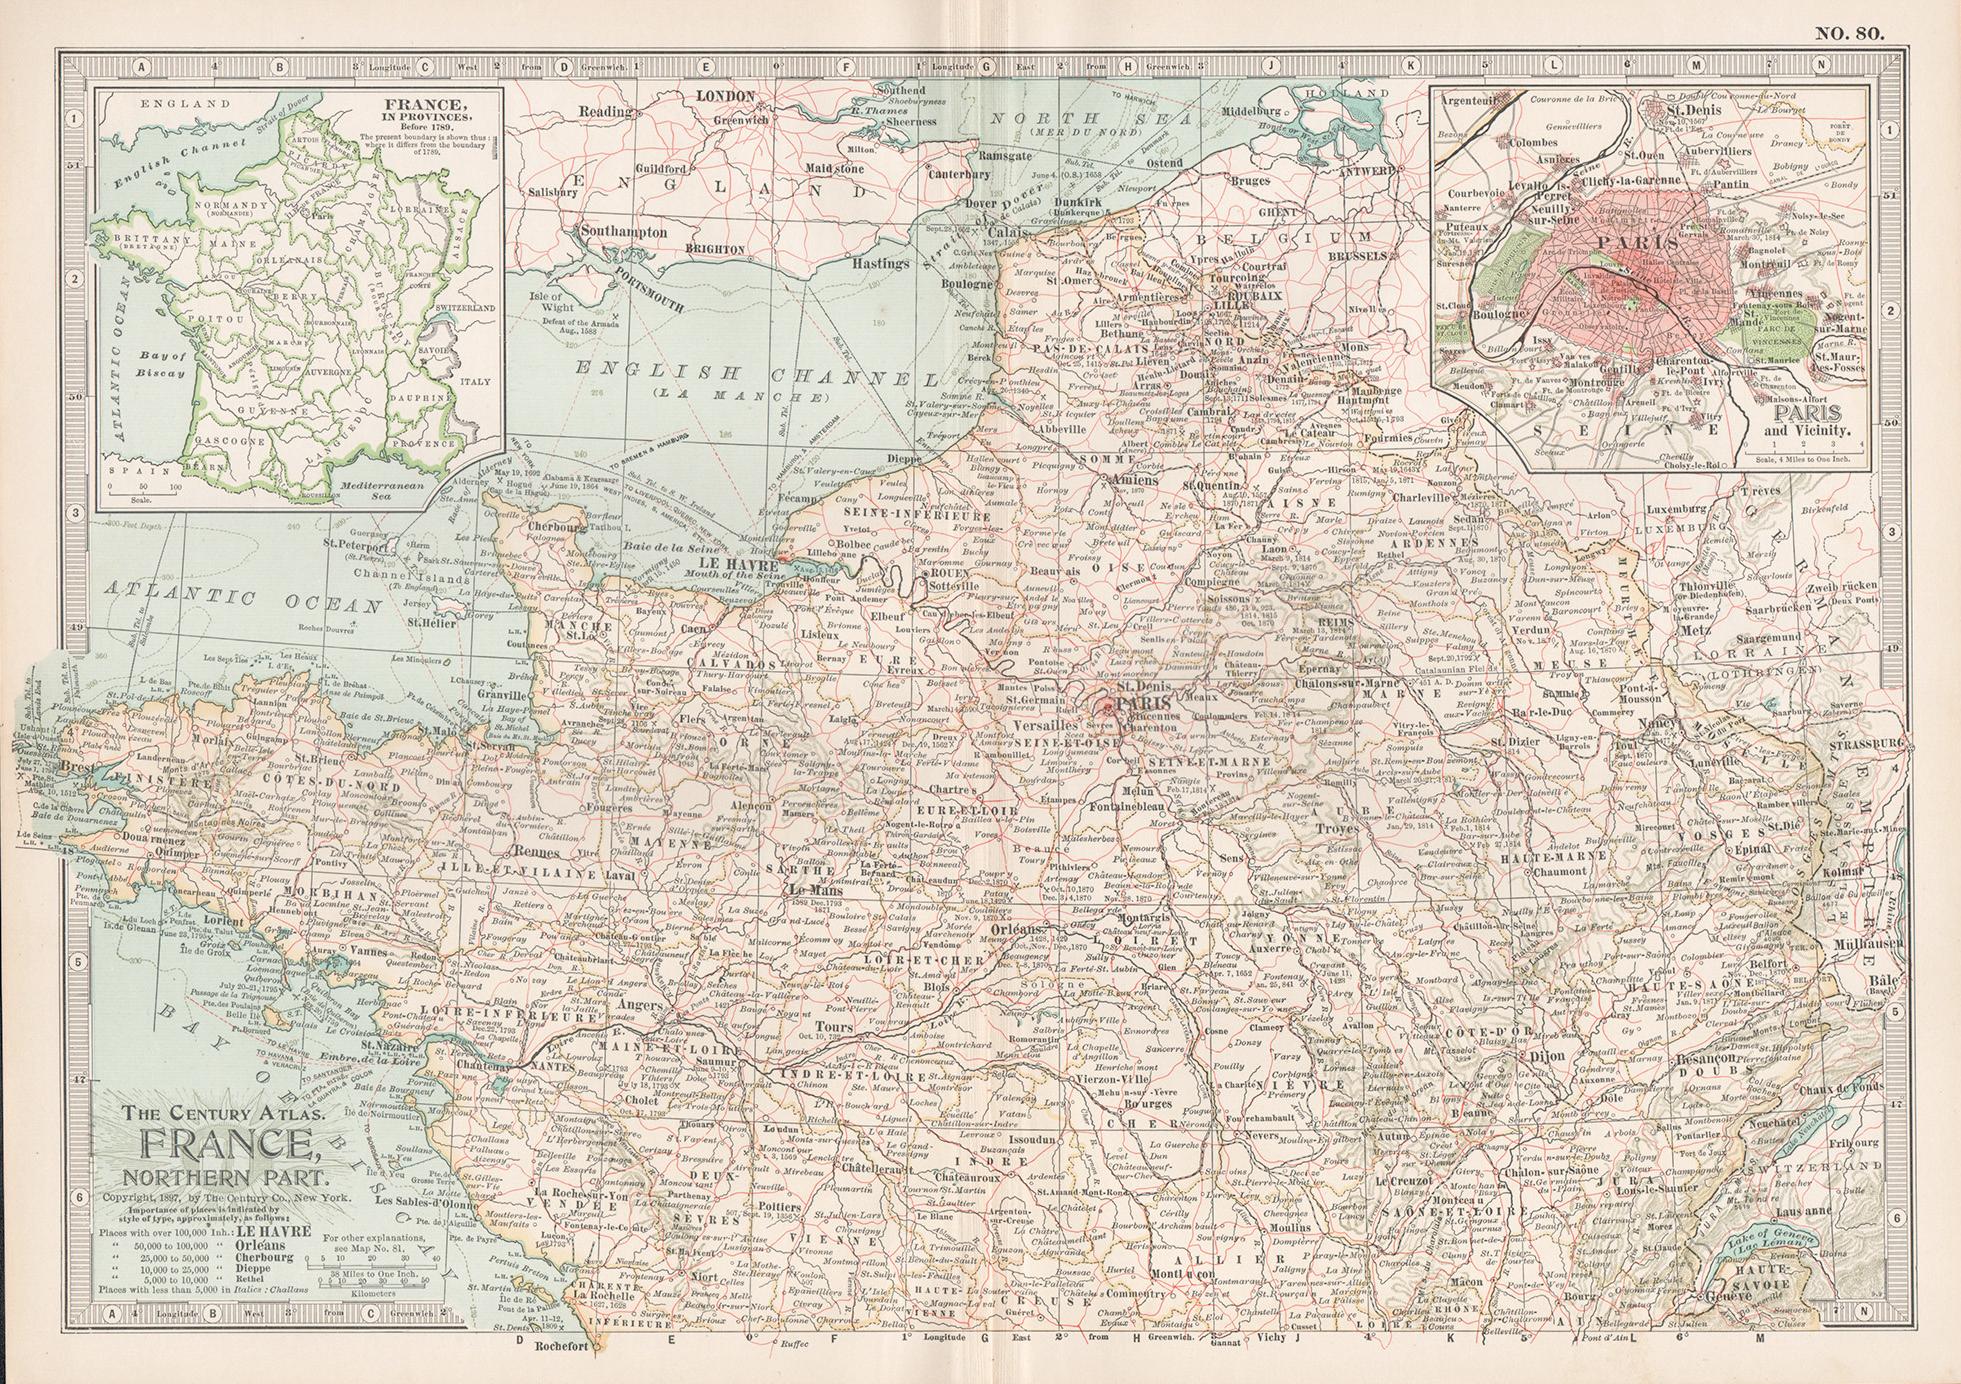 Unknown Print - France, Northern Part. Century Atlas antique map